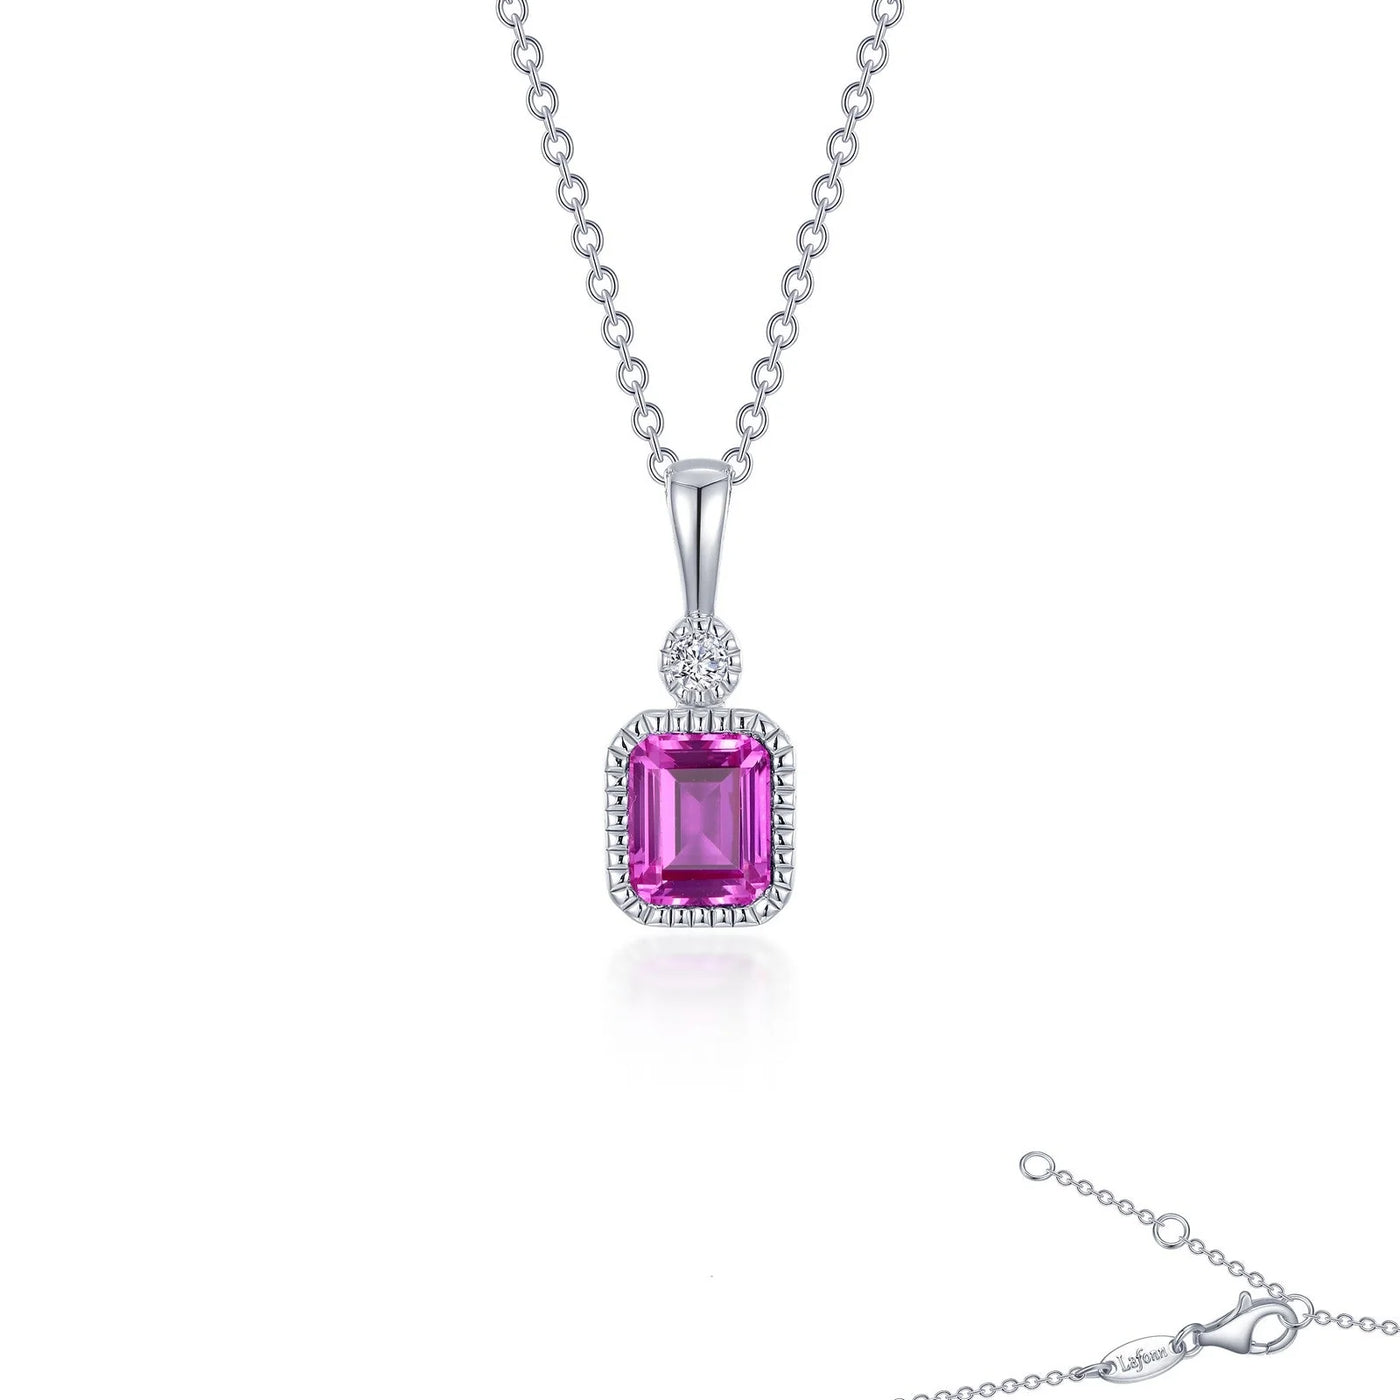 Simulated Emerald-Cut Pink Tourmaline & Diamond October Birthstone Necklace